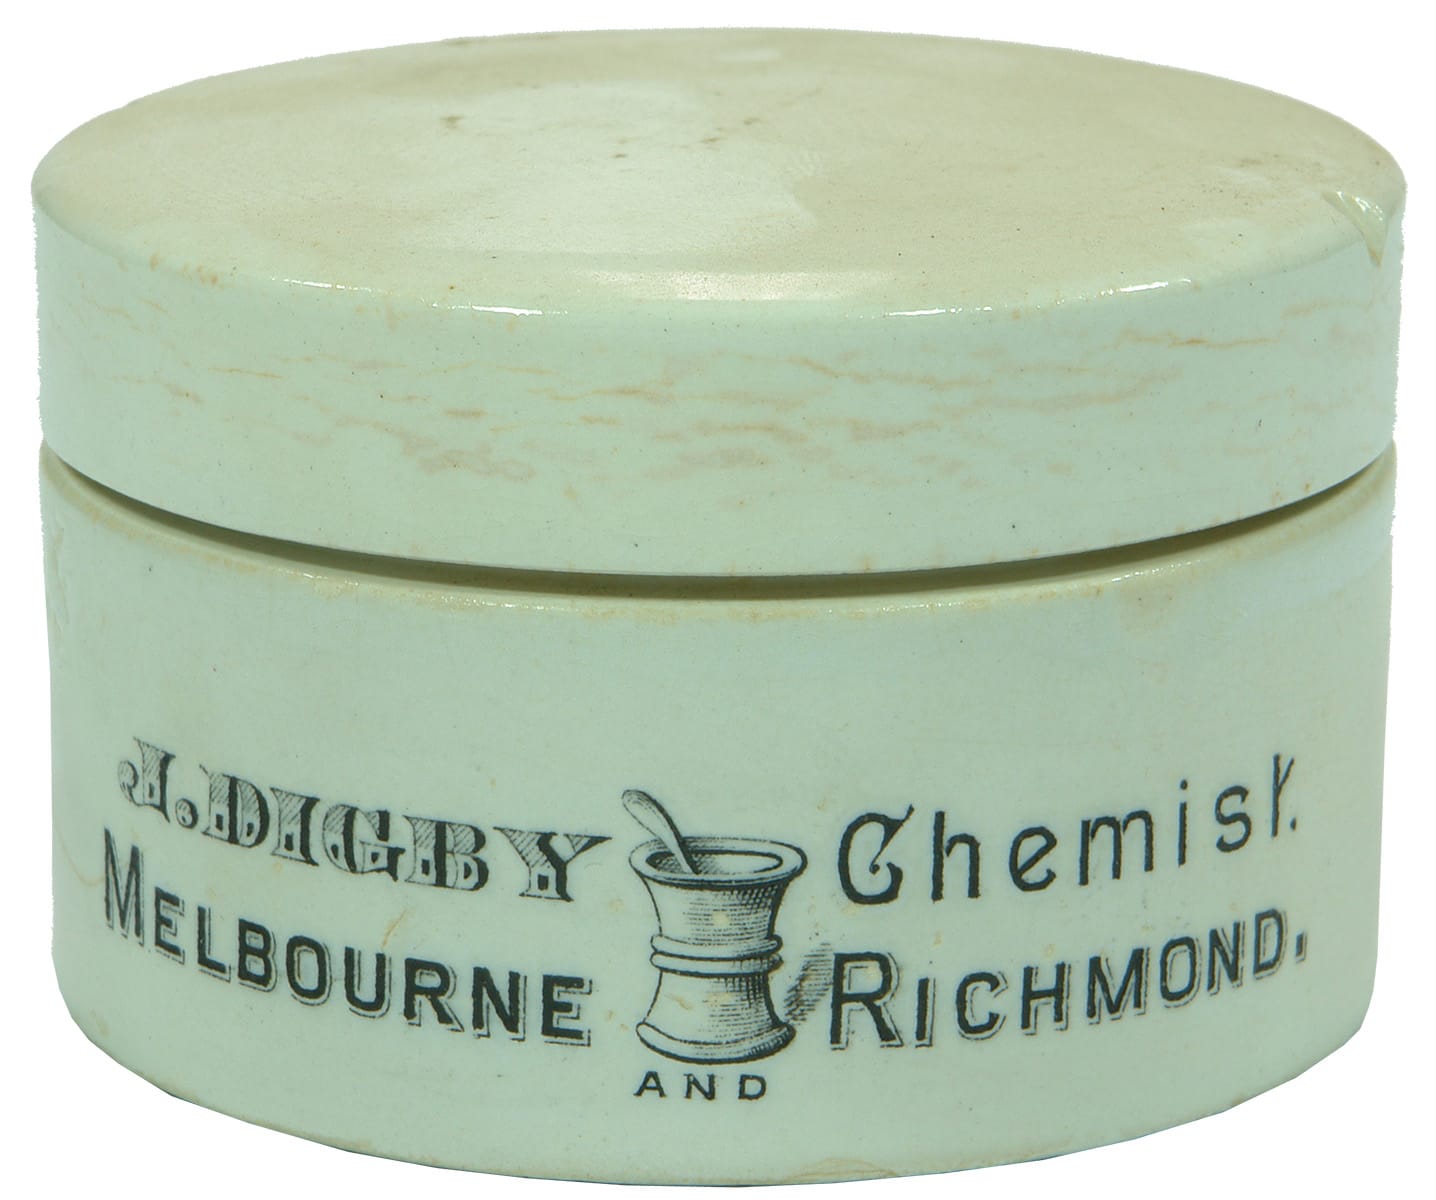 Digby Chemist Richmond Melbourne Ceramic Pot